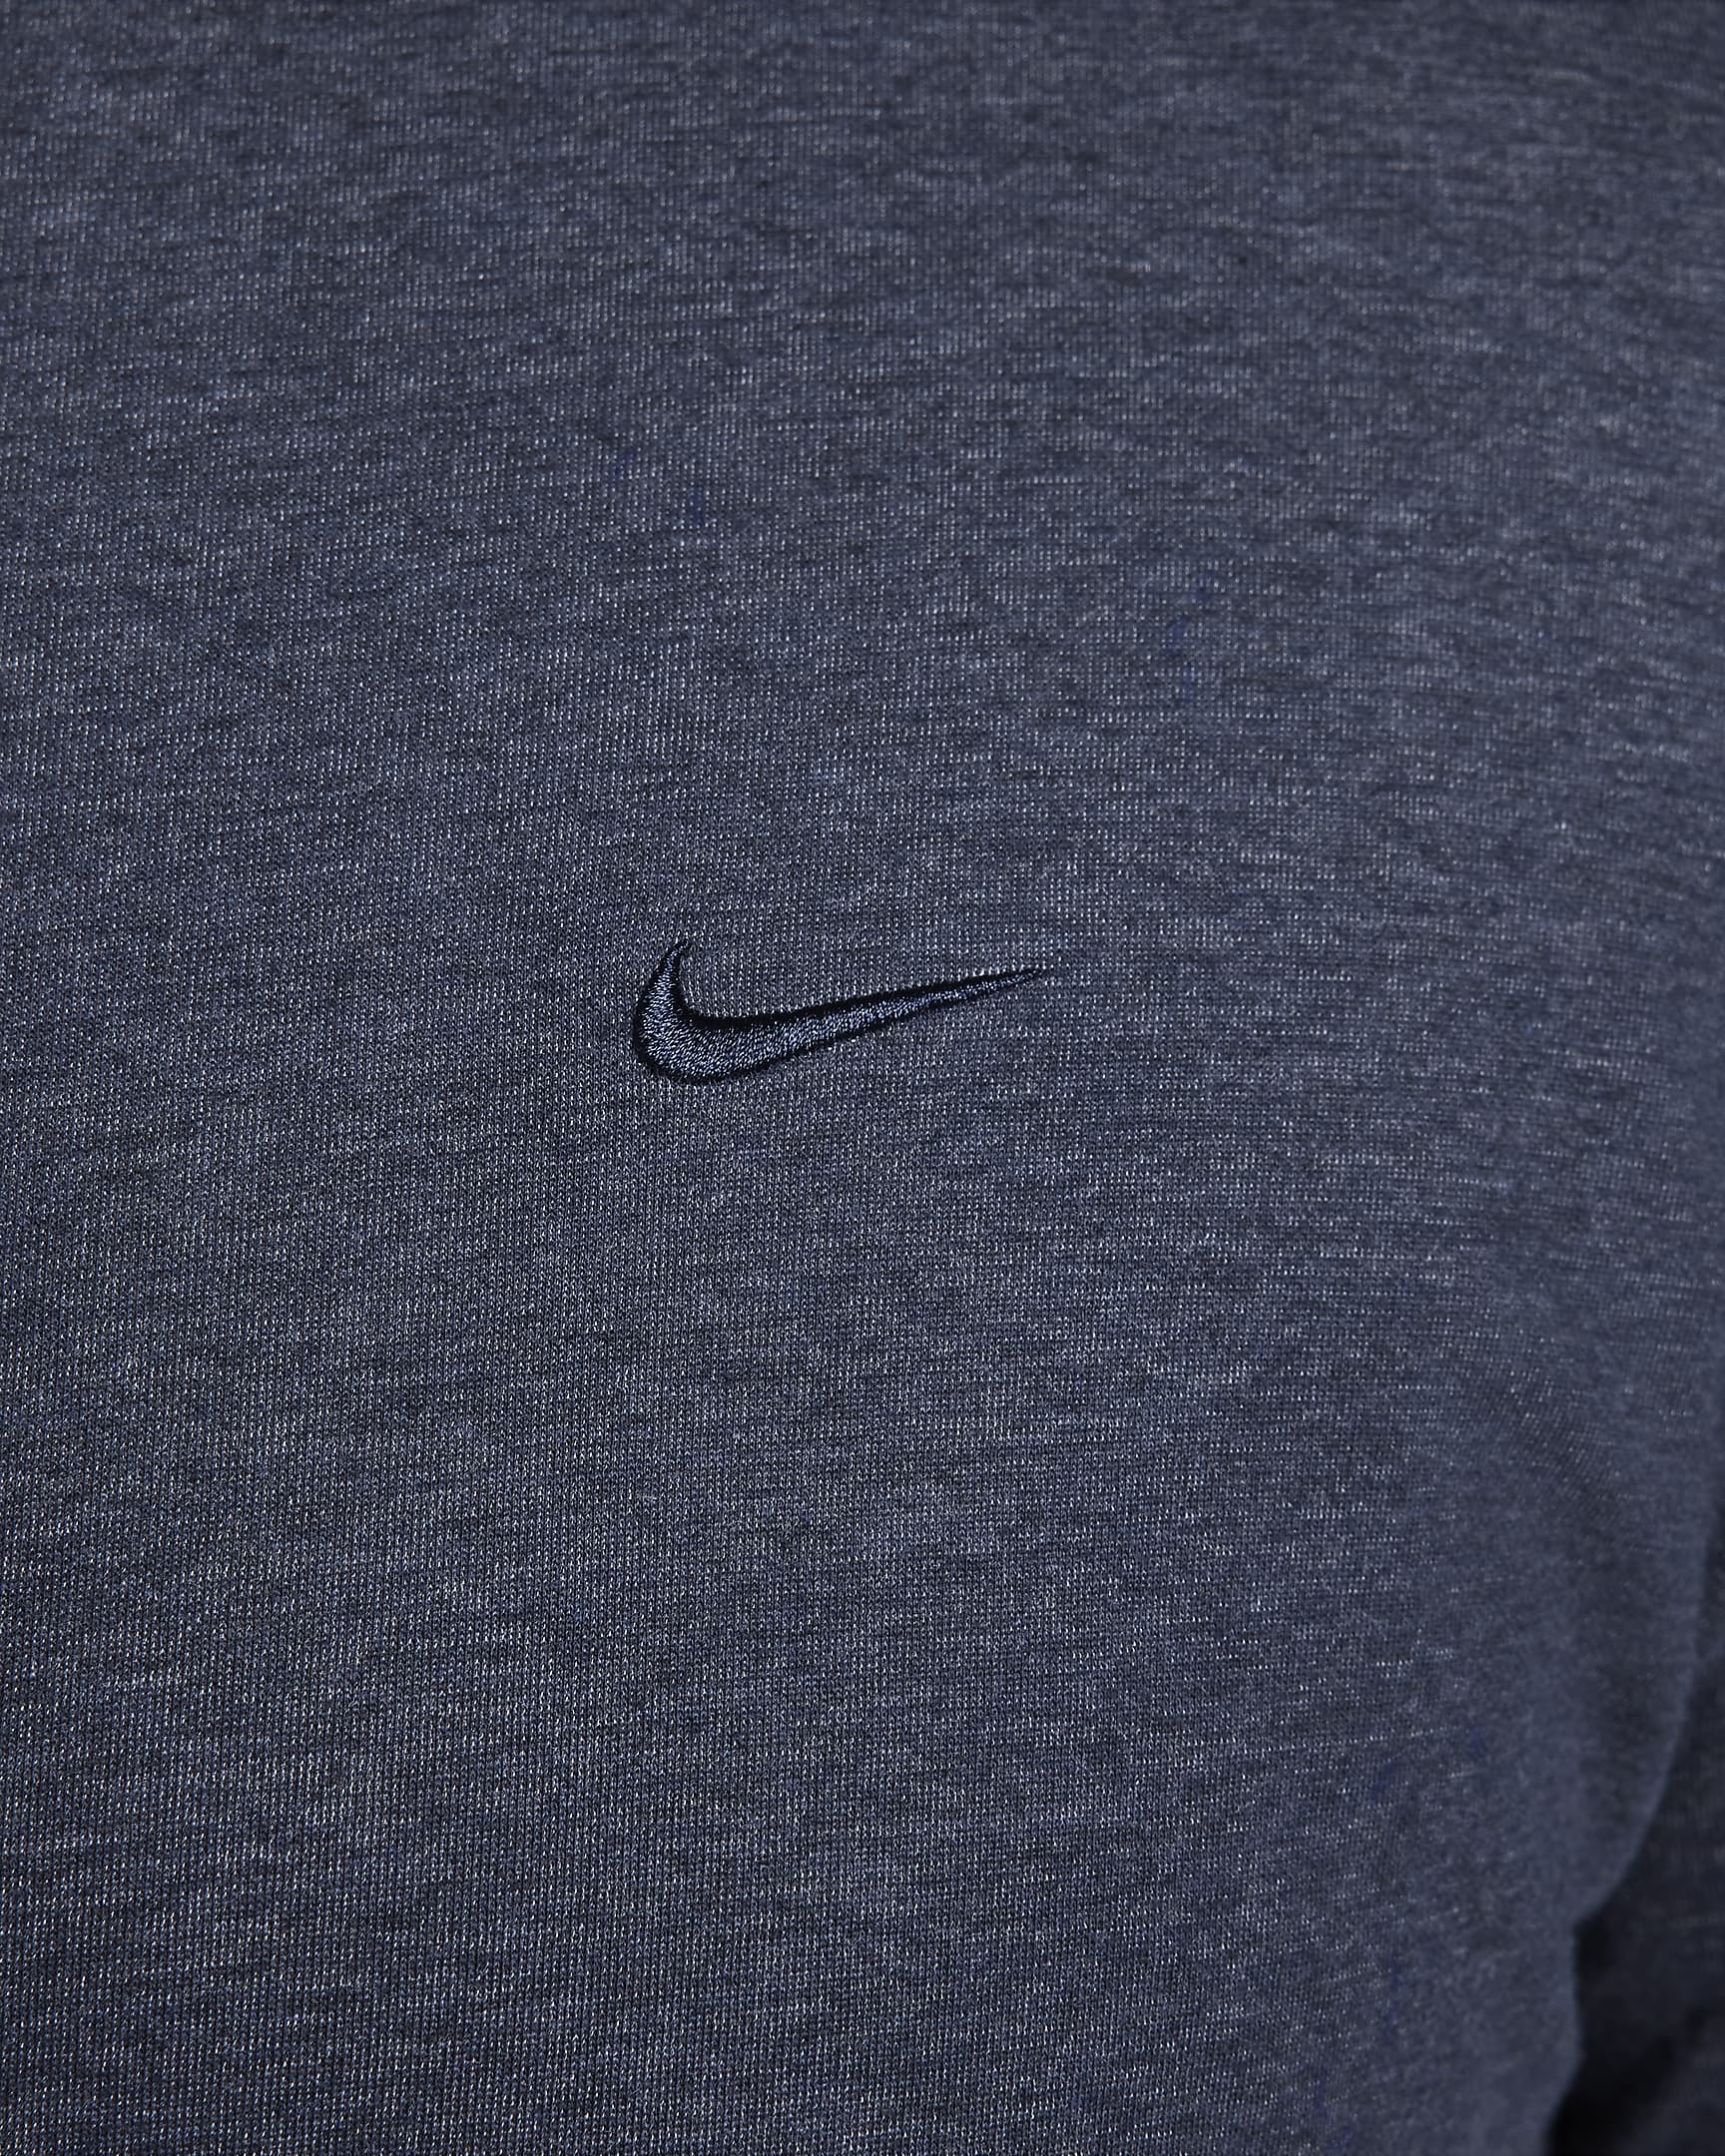 Nike Primary Men's Dri-FIT Short-sleeve Versatile Top. Nike UK